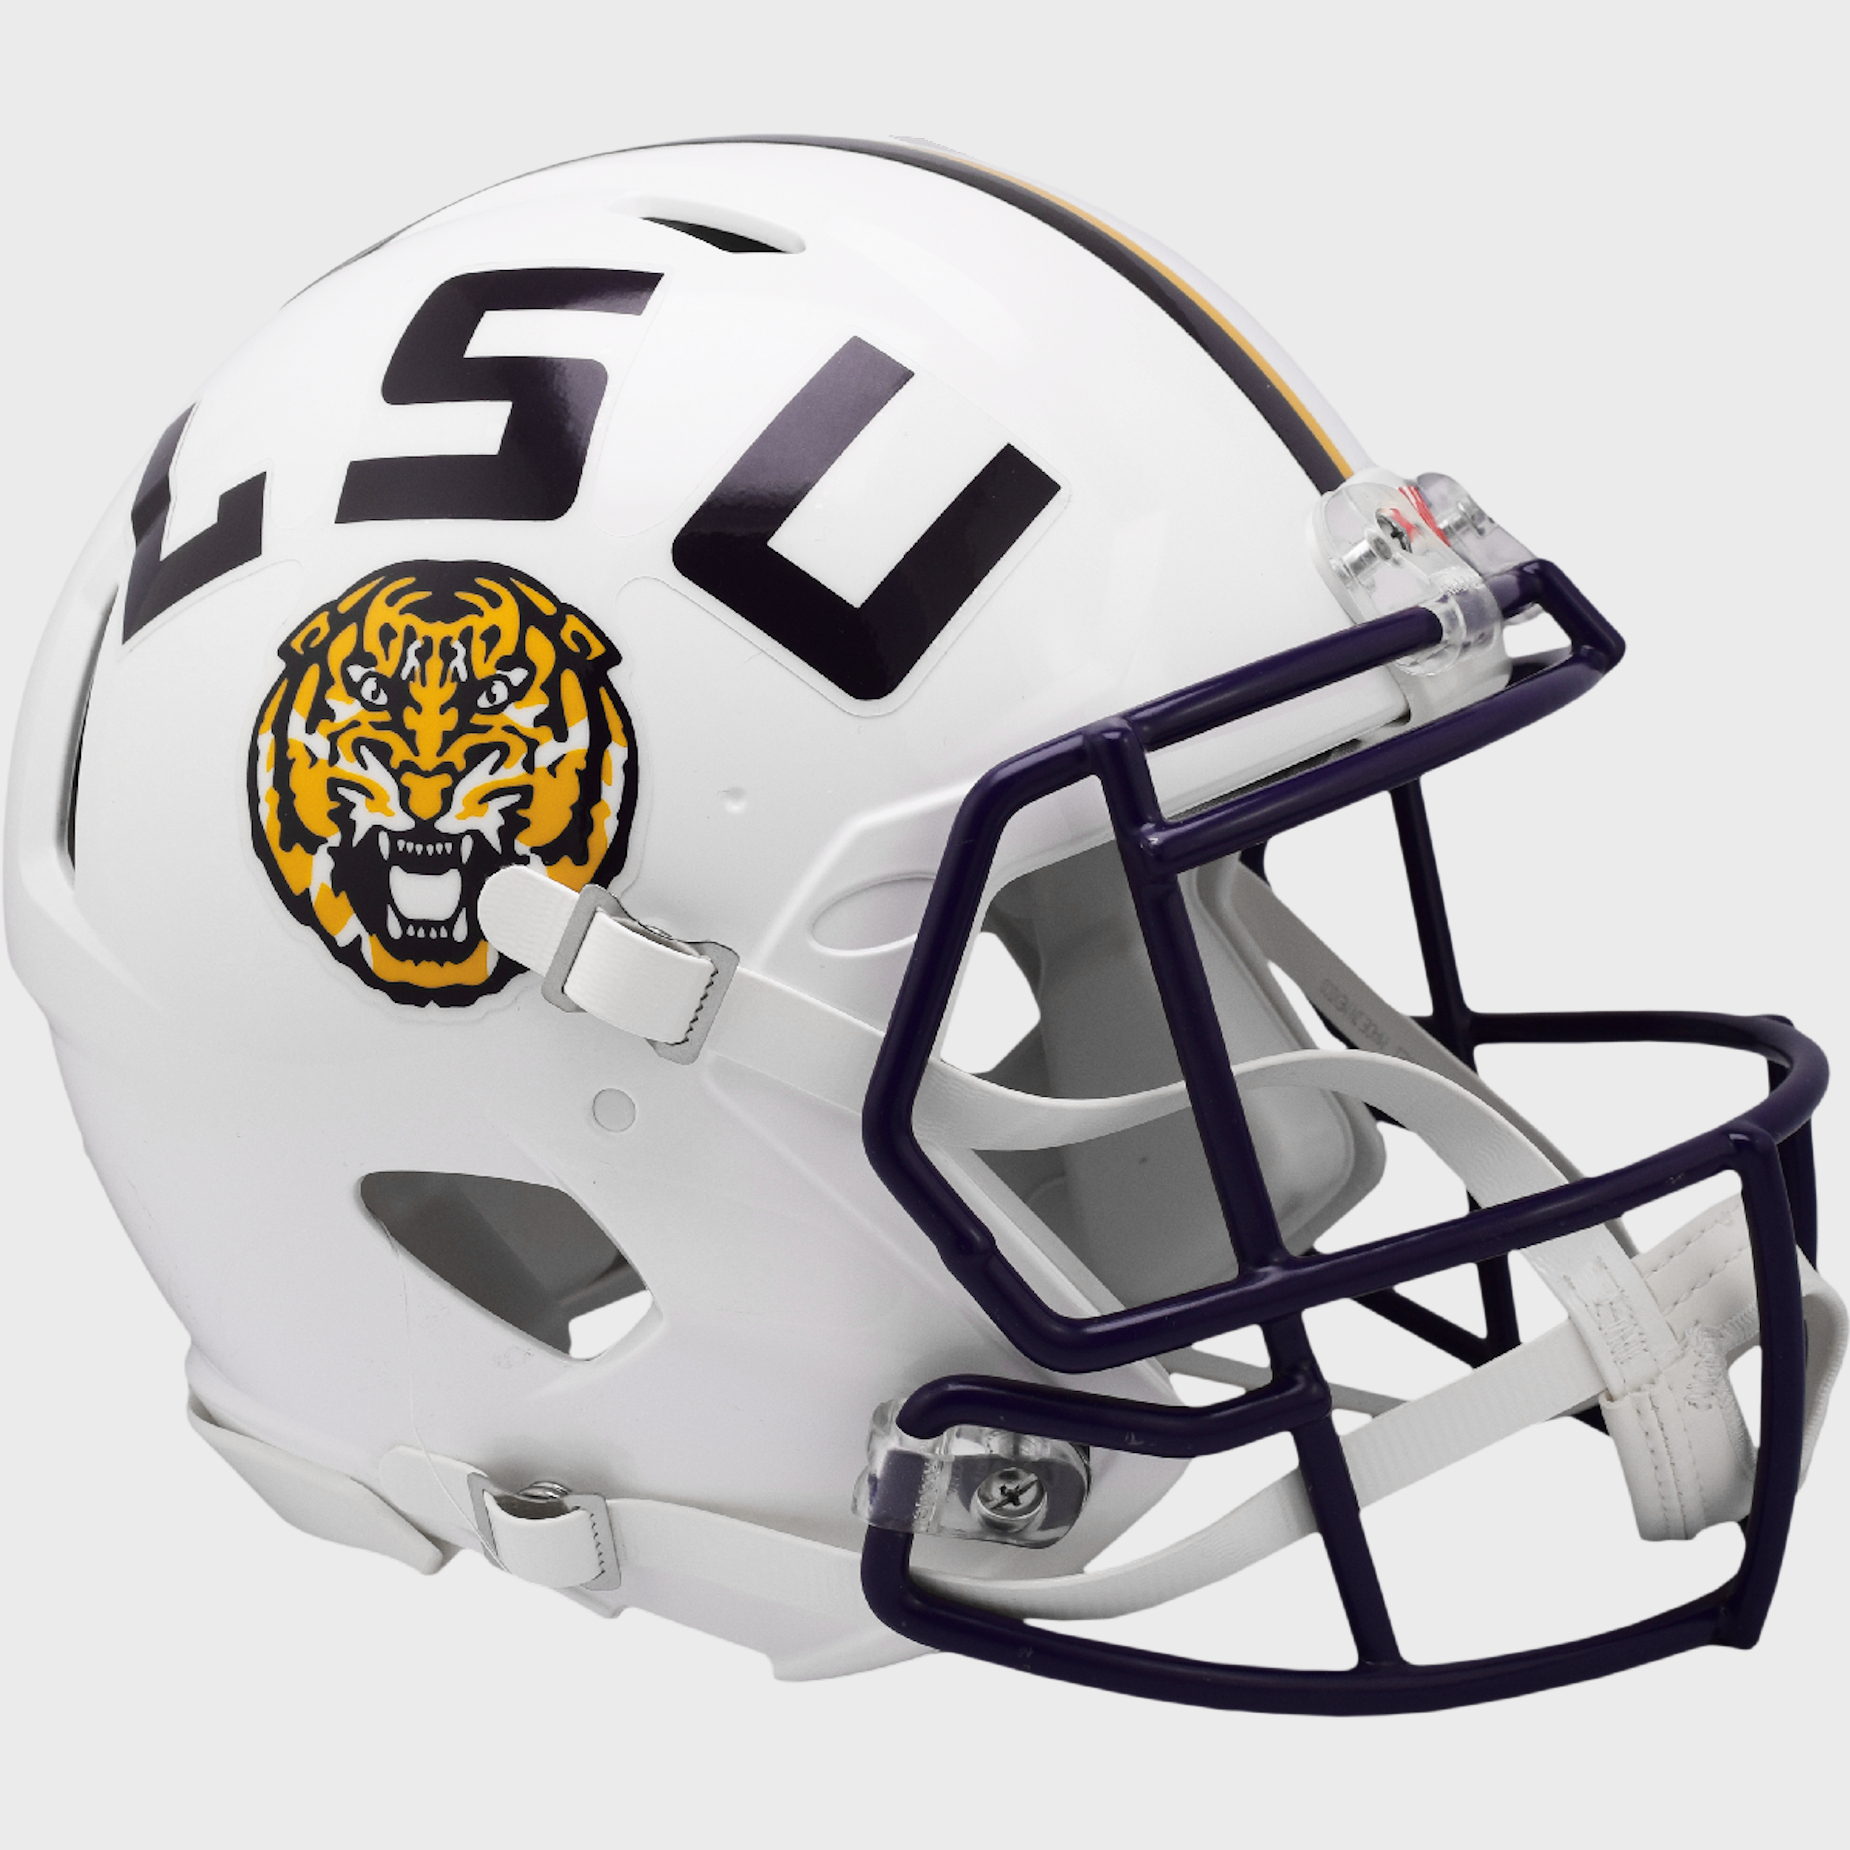 LSU Tigers authentic full size helmet